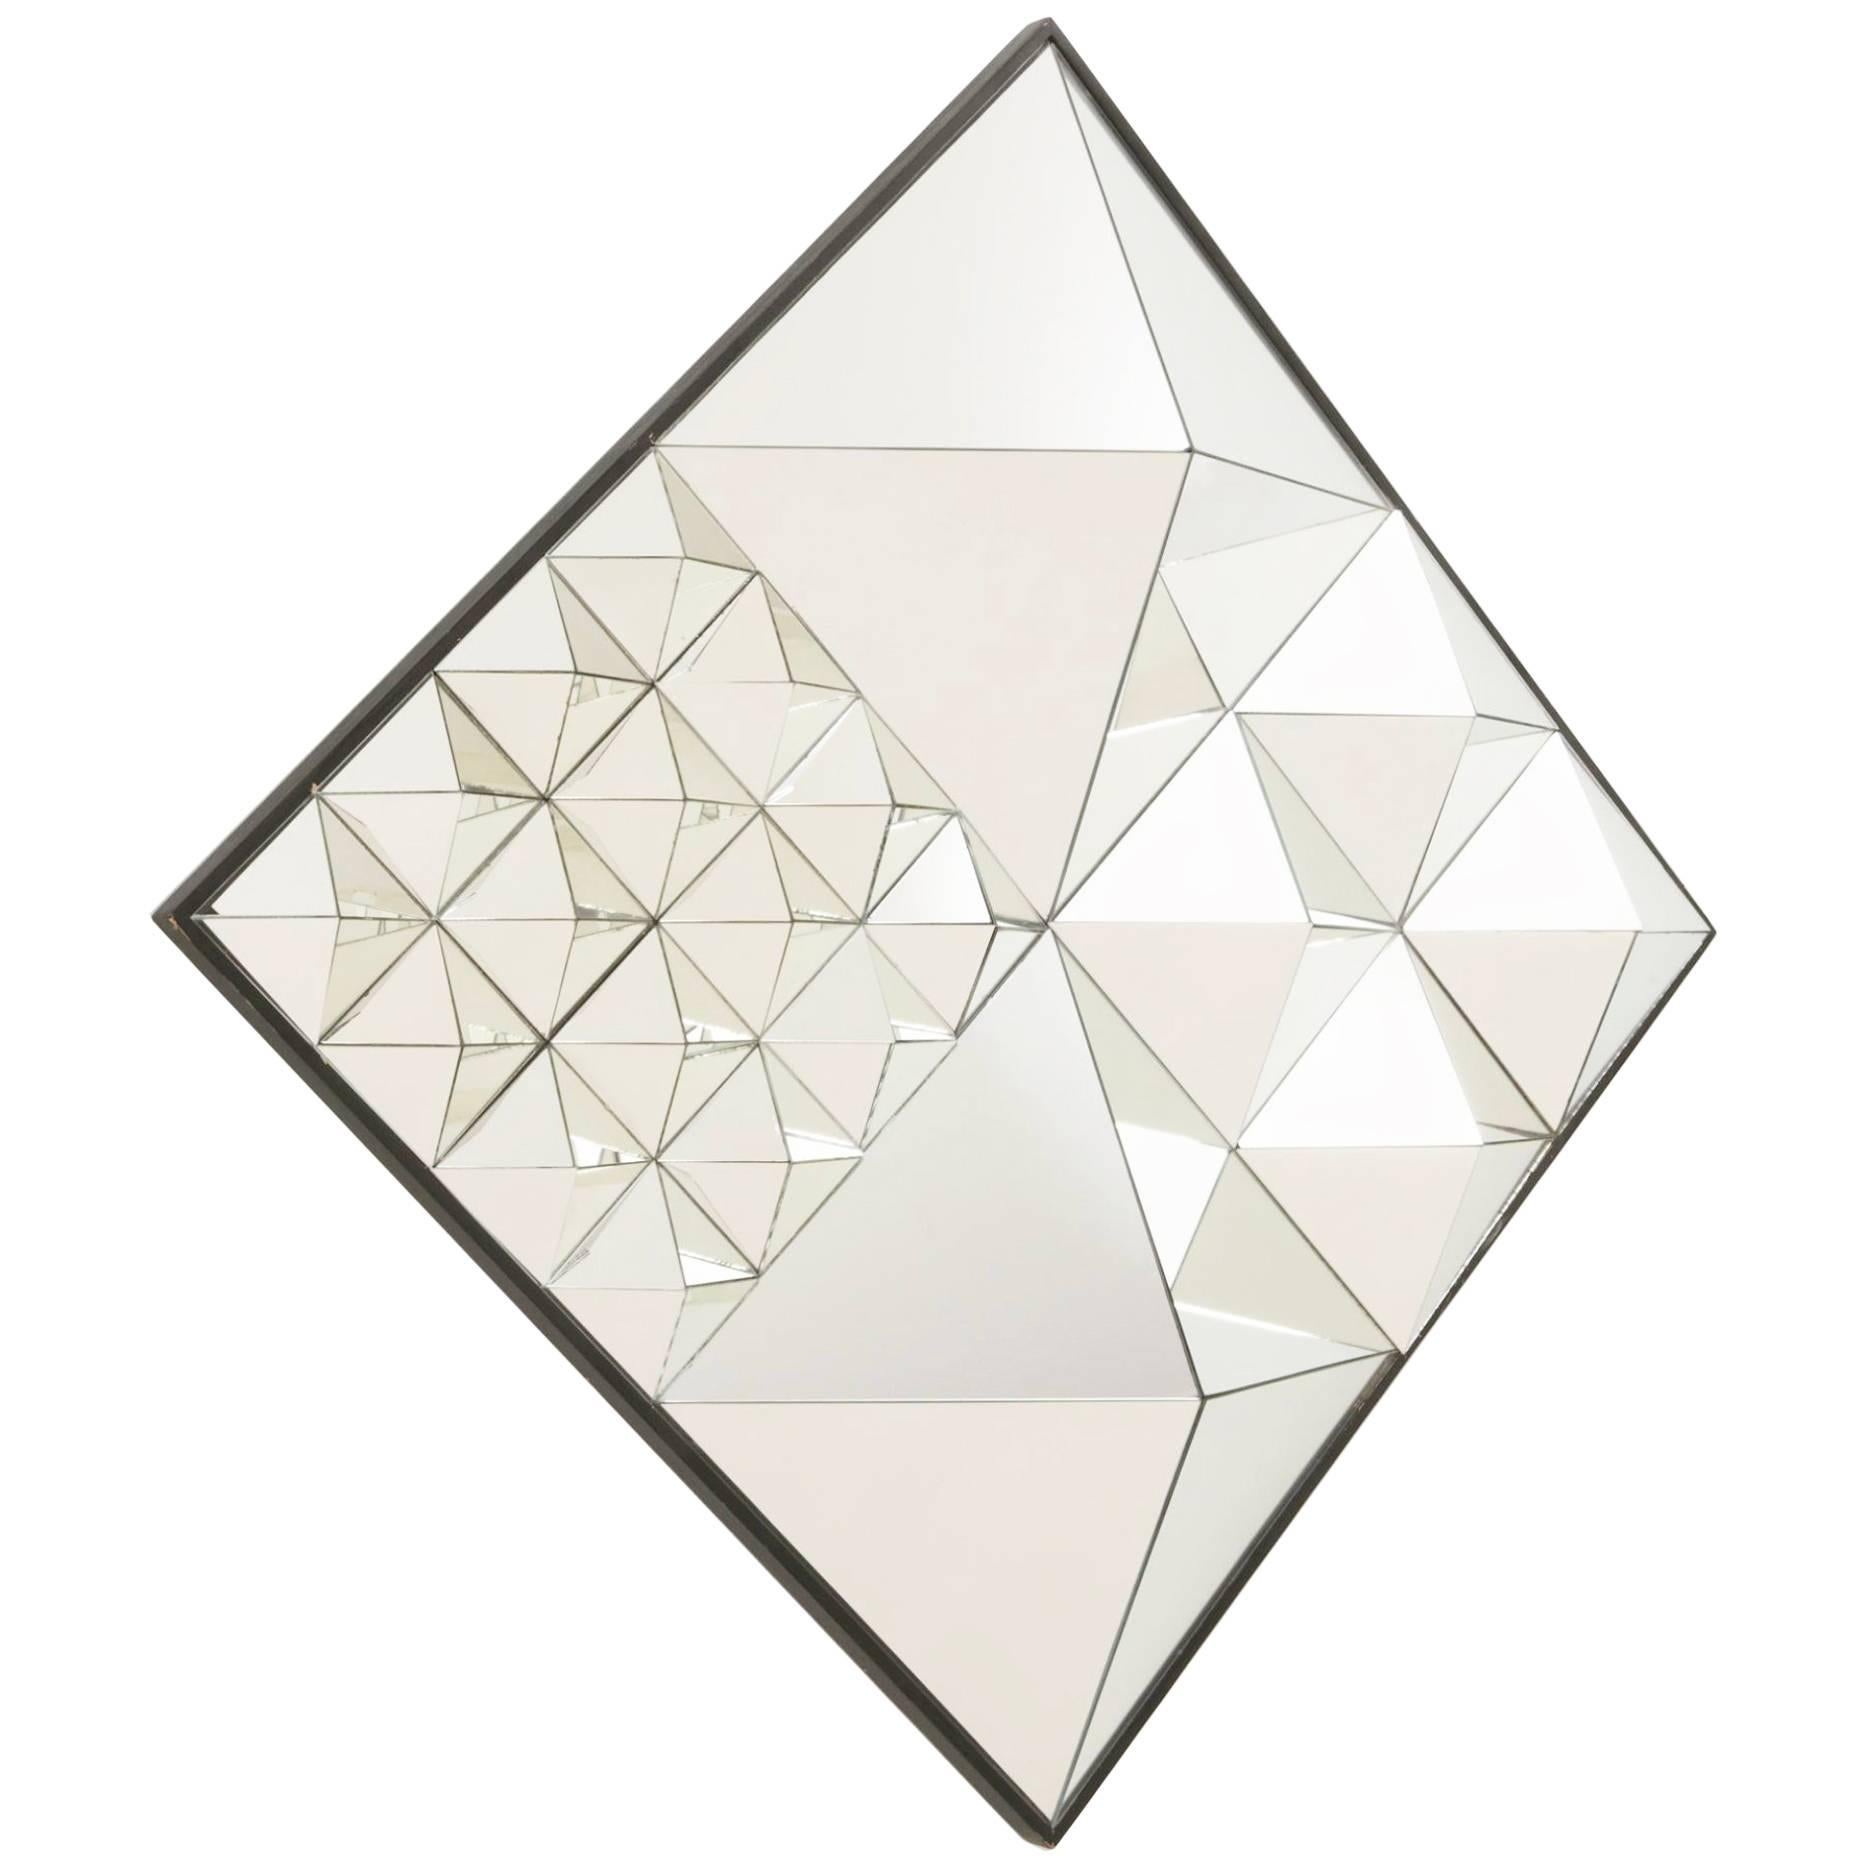 Verner Panton “Diamond Pyramid” Mirror, Model No. 570039 For Sale